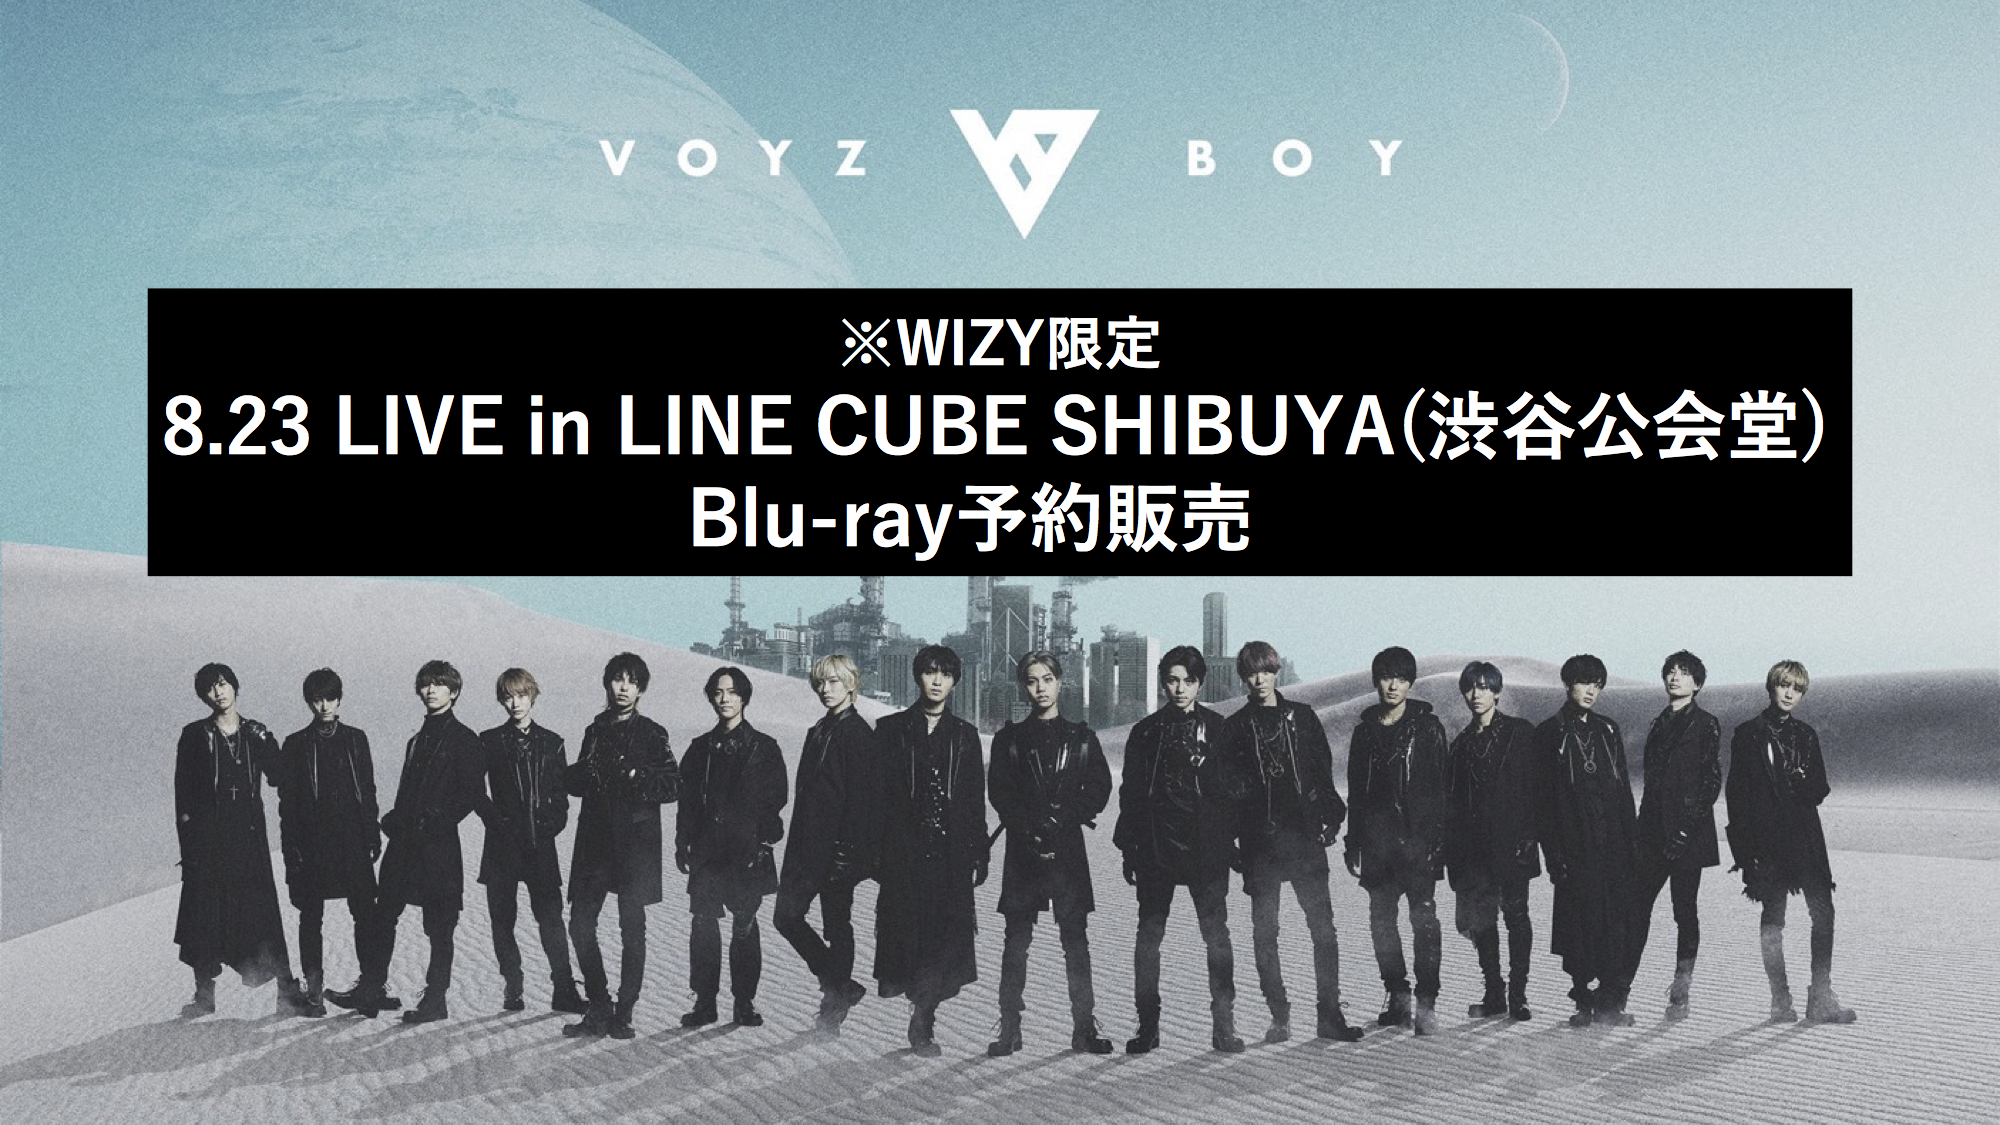 VOYZ BOY - ※WIZY限定 VOYZ BOY8.23 LIVE Blu-ray予約販売 | 音楽専門 